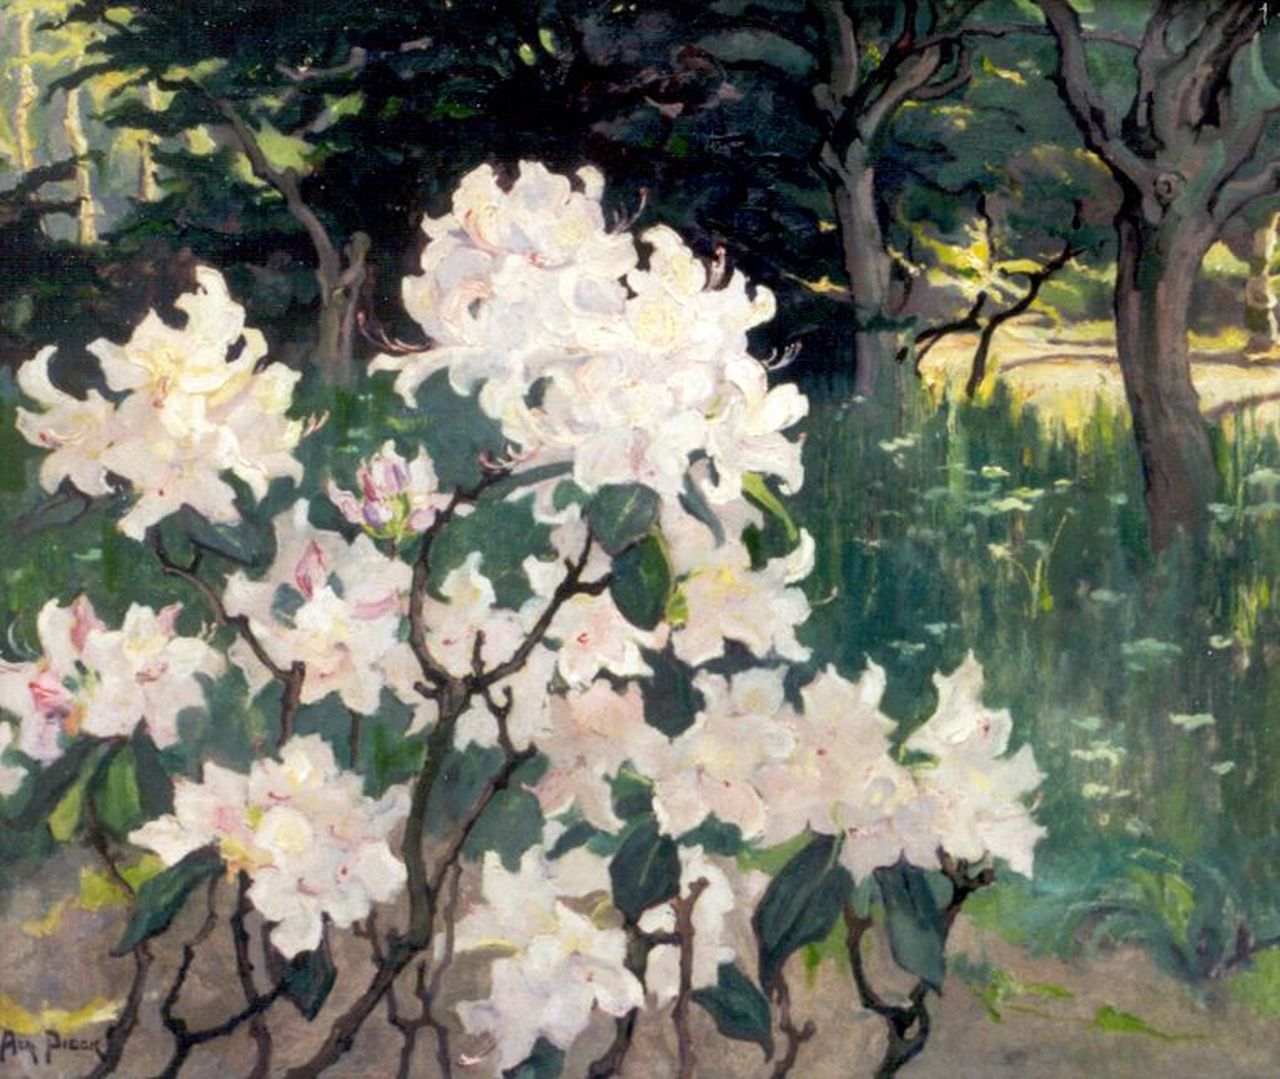 Pieck A.J.  | Adriana Jacoba 'Adri' Pieck, Rhododendrons, olieverf op doek 55,9 x 65,5 cm, gesigneerd linksonder